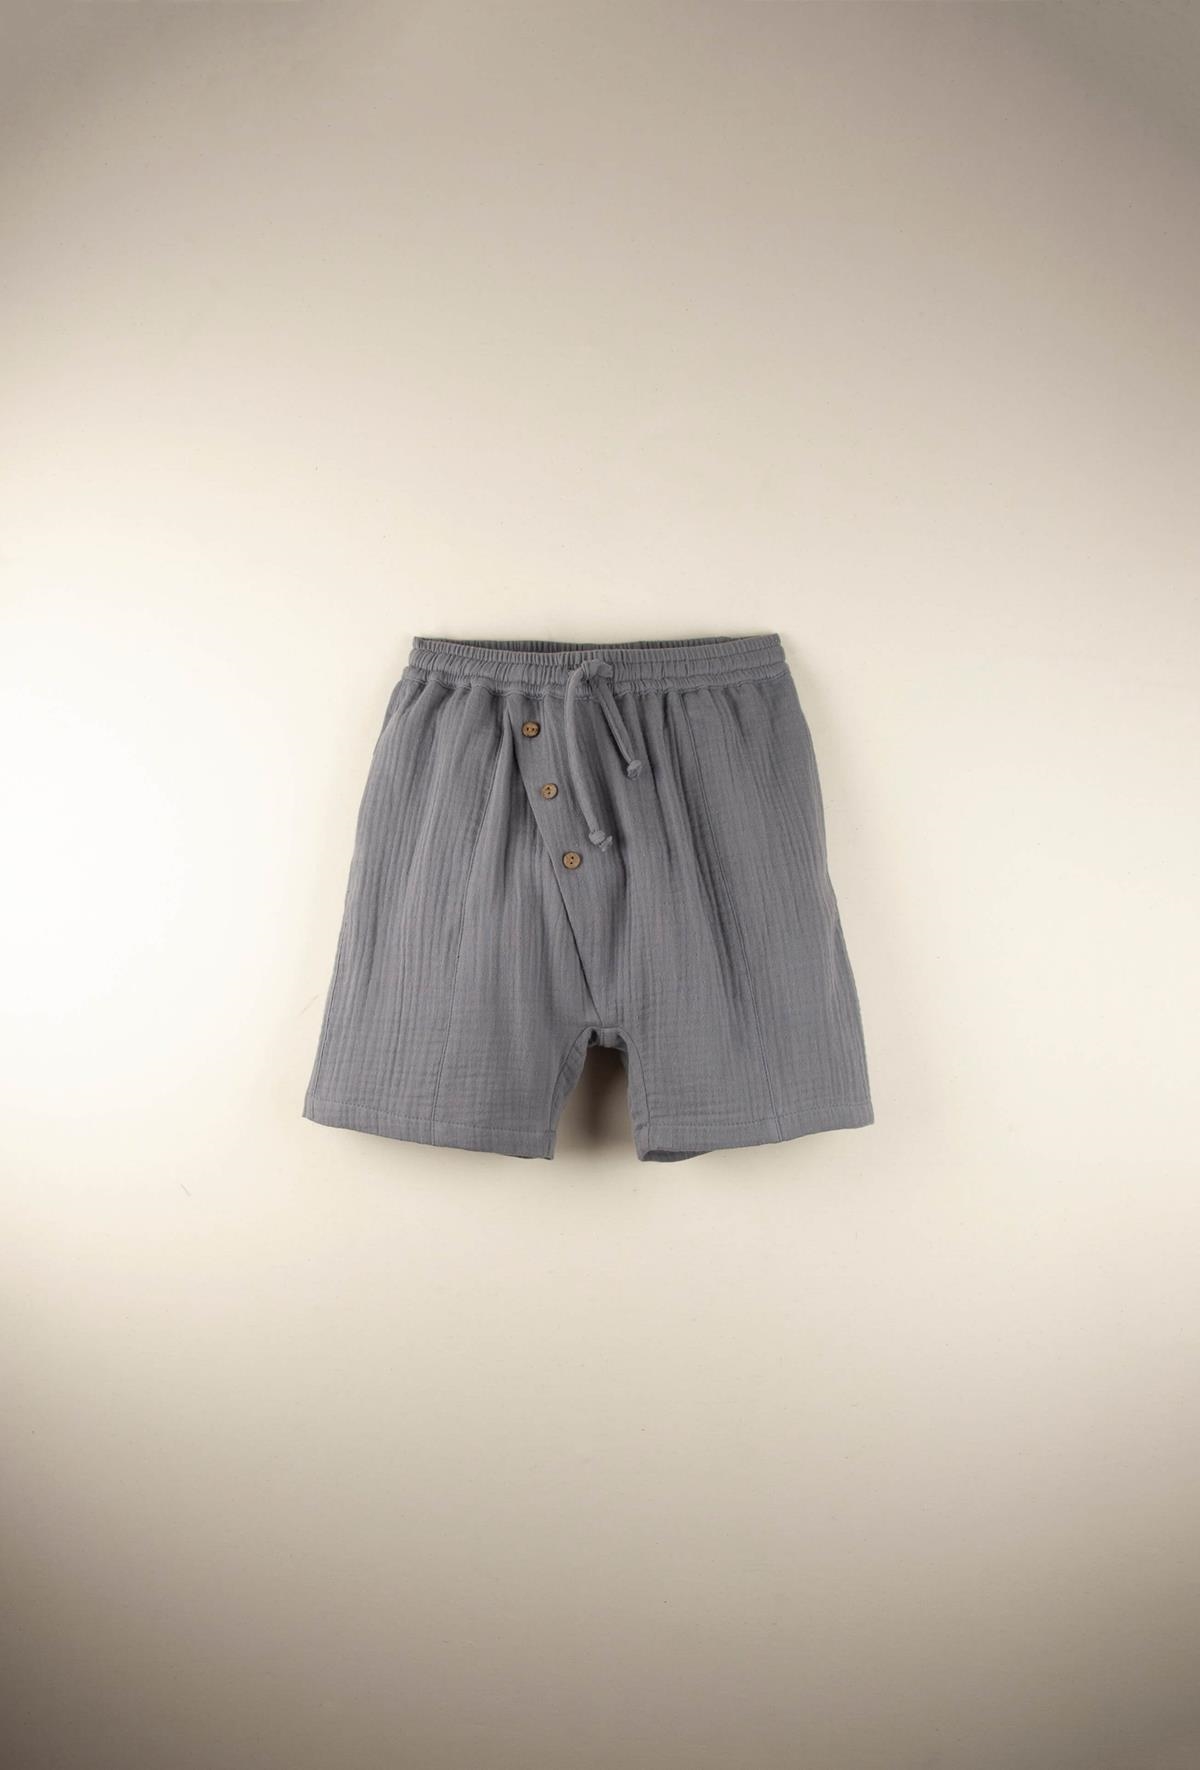 Mod.13.2 Greyish-blue organic Bermuda shorts | SS22 Mod.13.2 Greyish-blue organic Bermuda shorts | 1